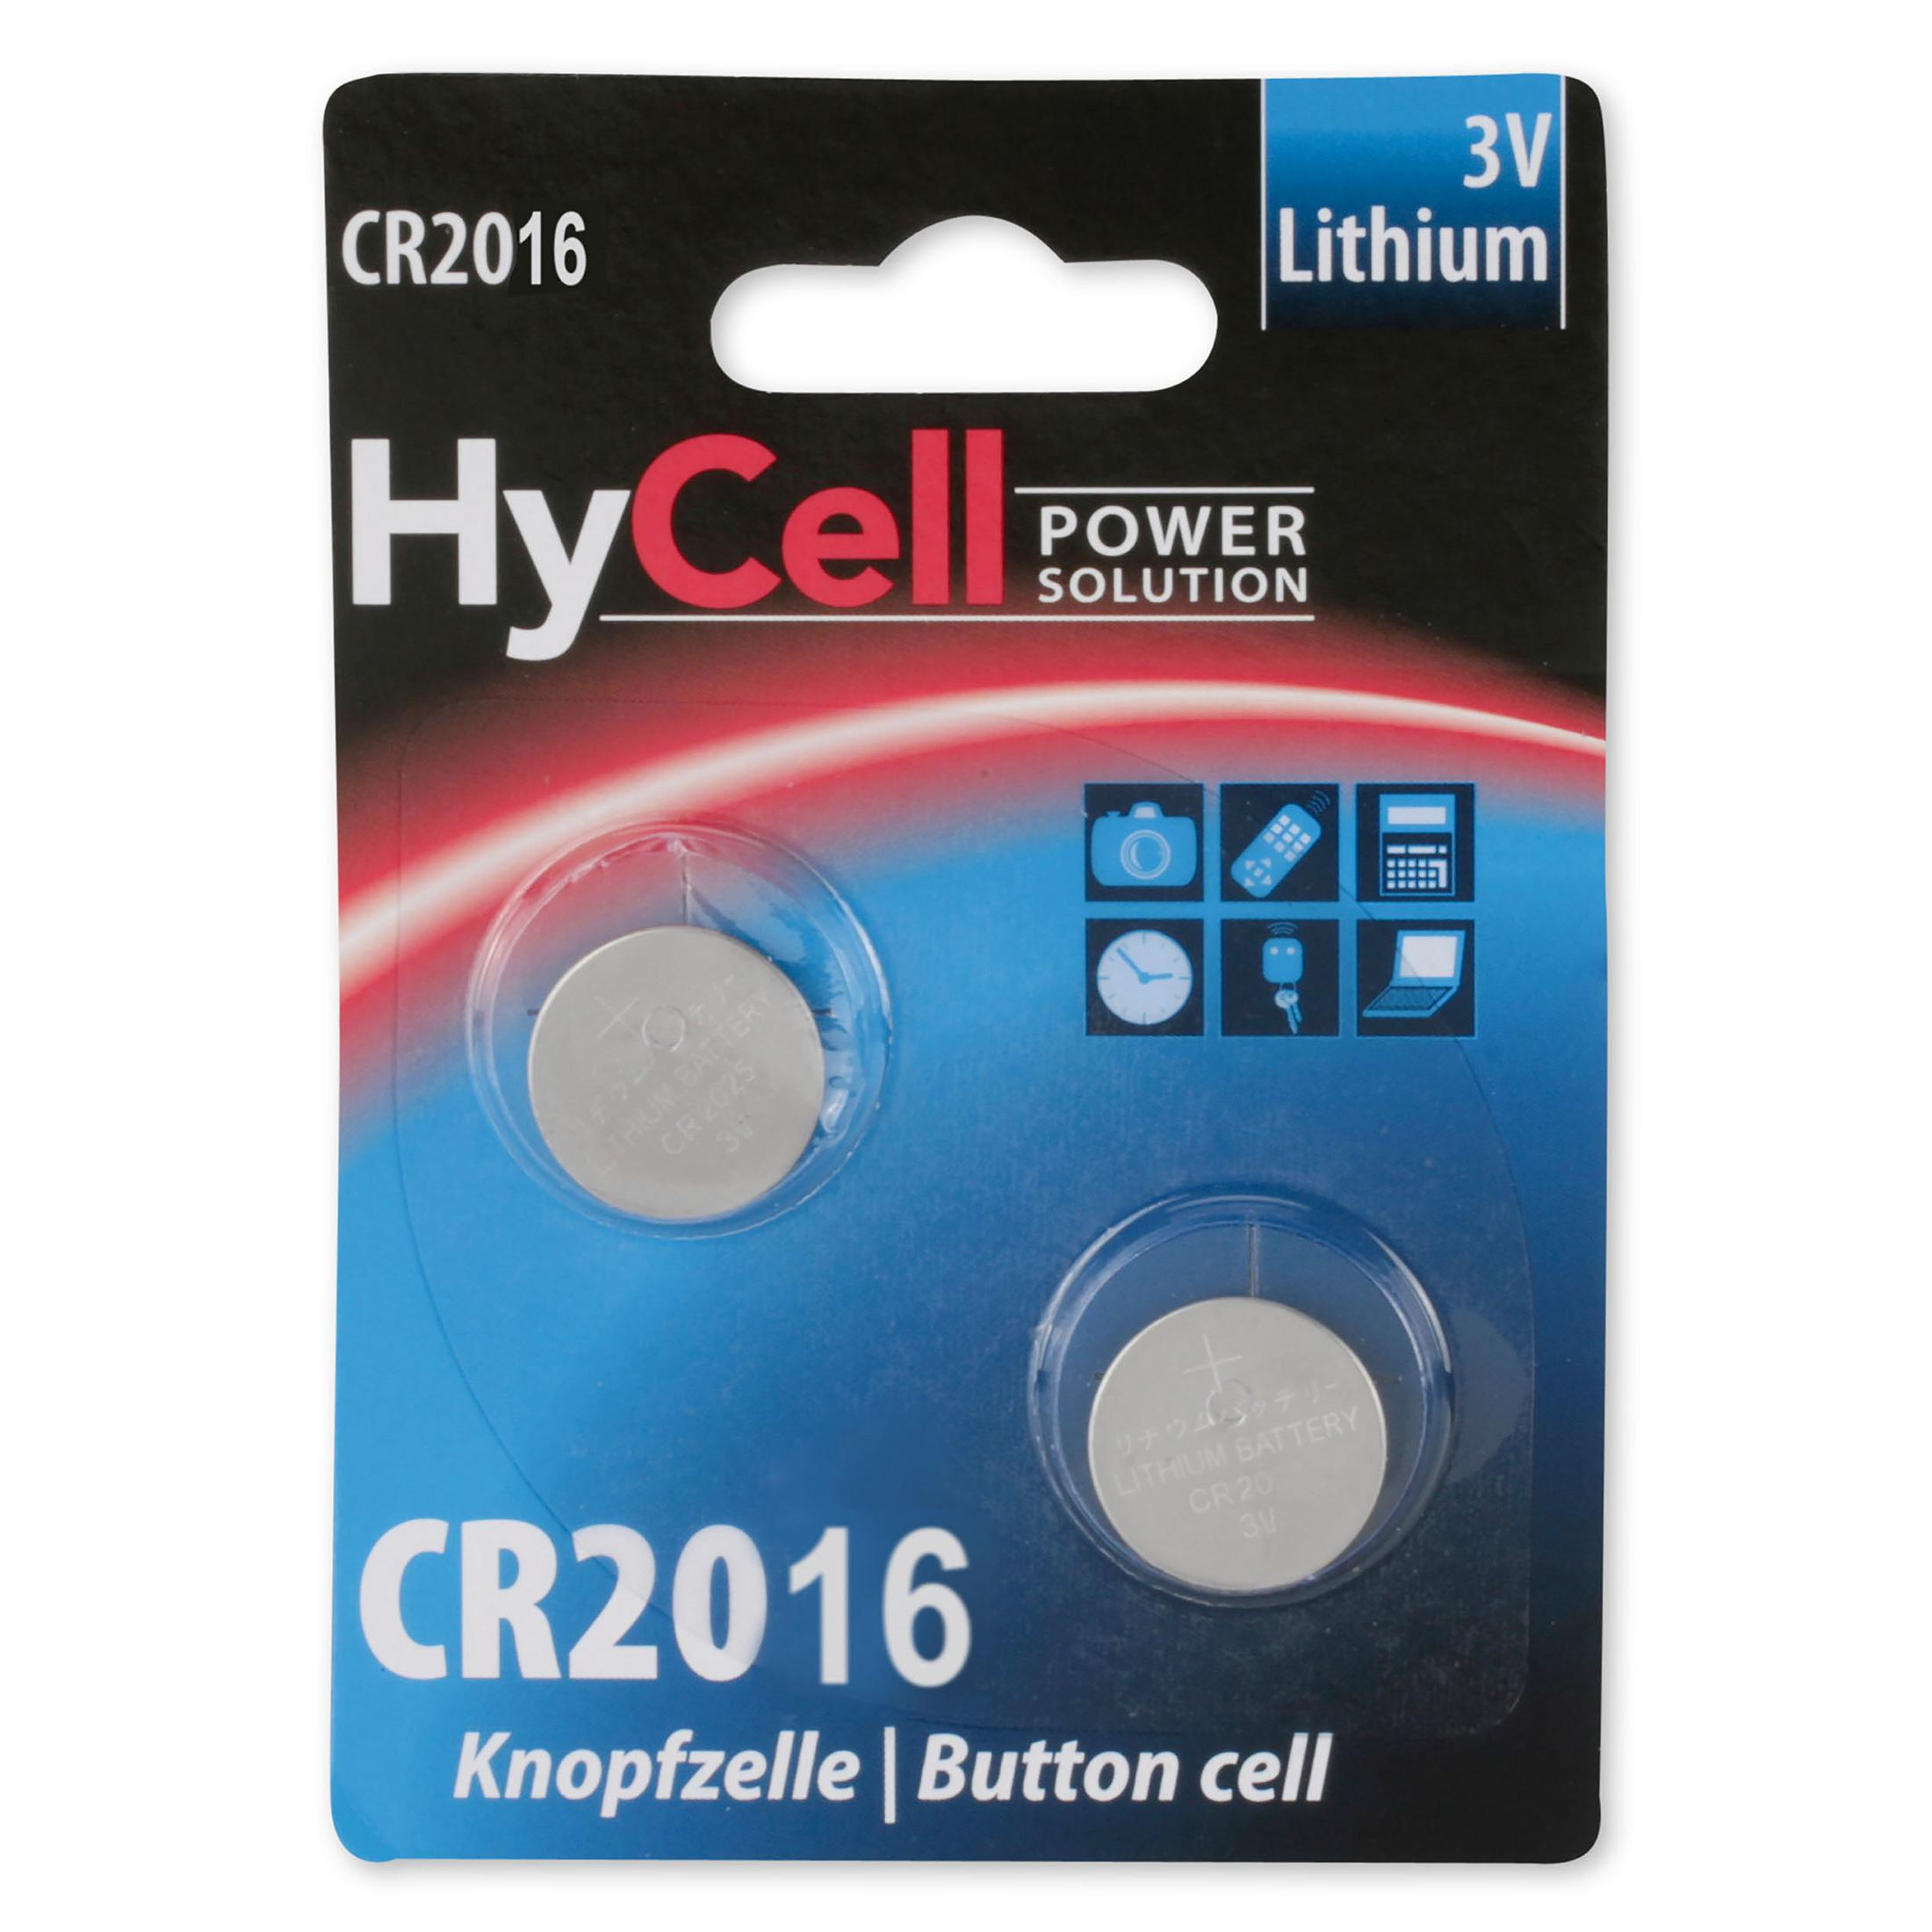 ANSMANN 5020182 CR BLISTER 3 HYCELL Volt Lithium, 2016 2-ER Stück 2 Knopfzelle, CR2016